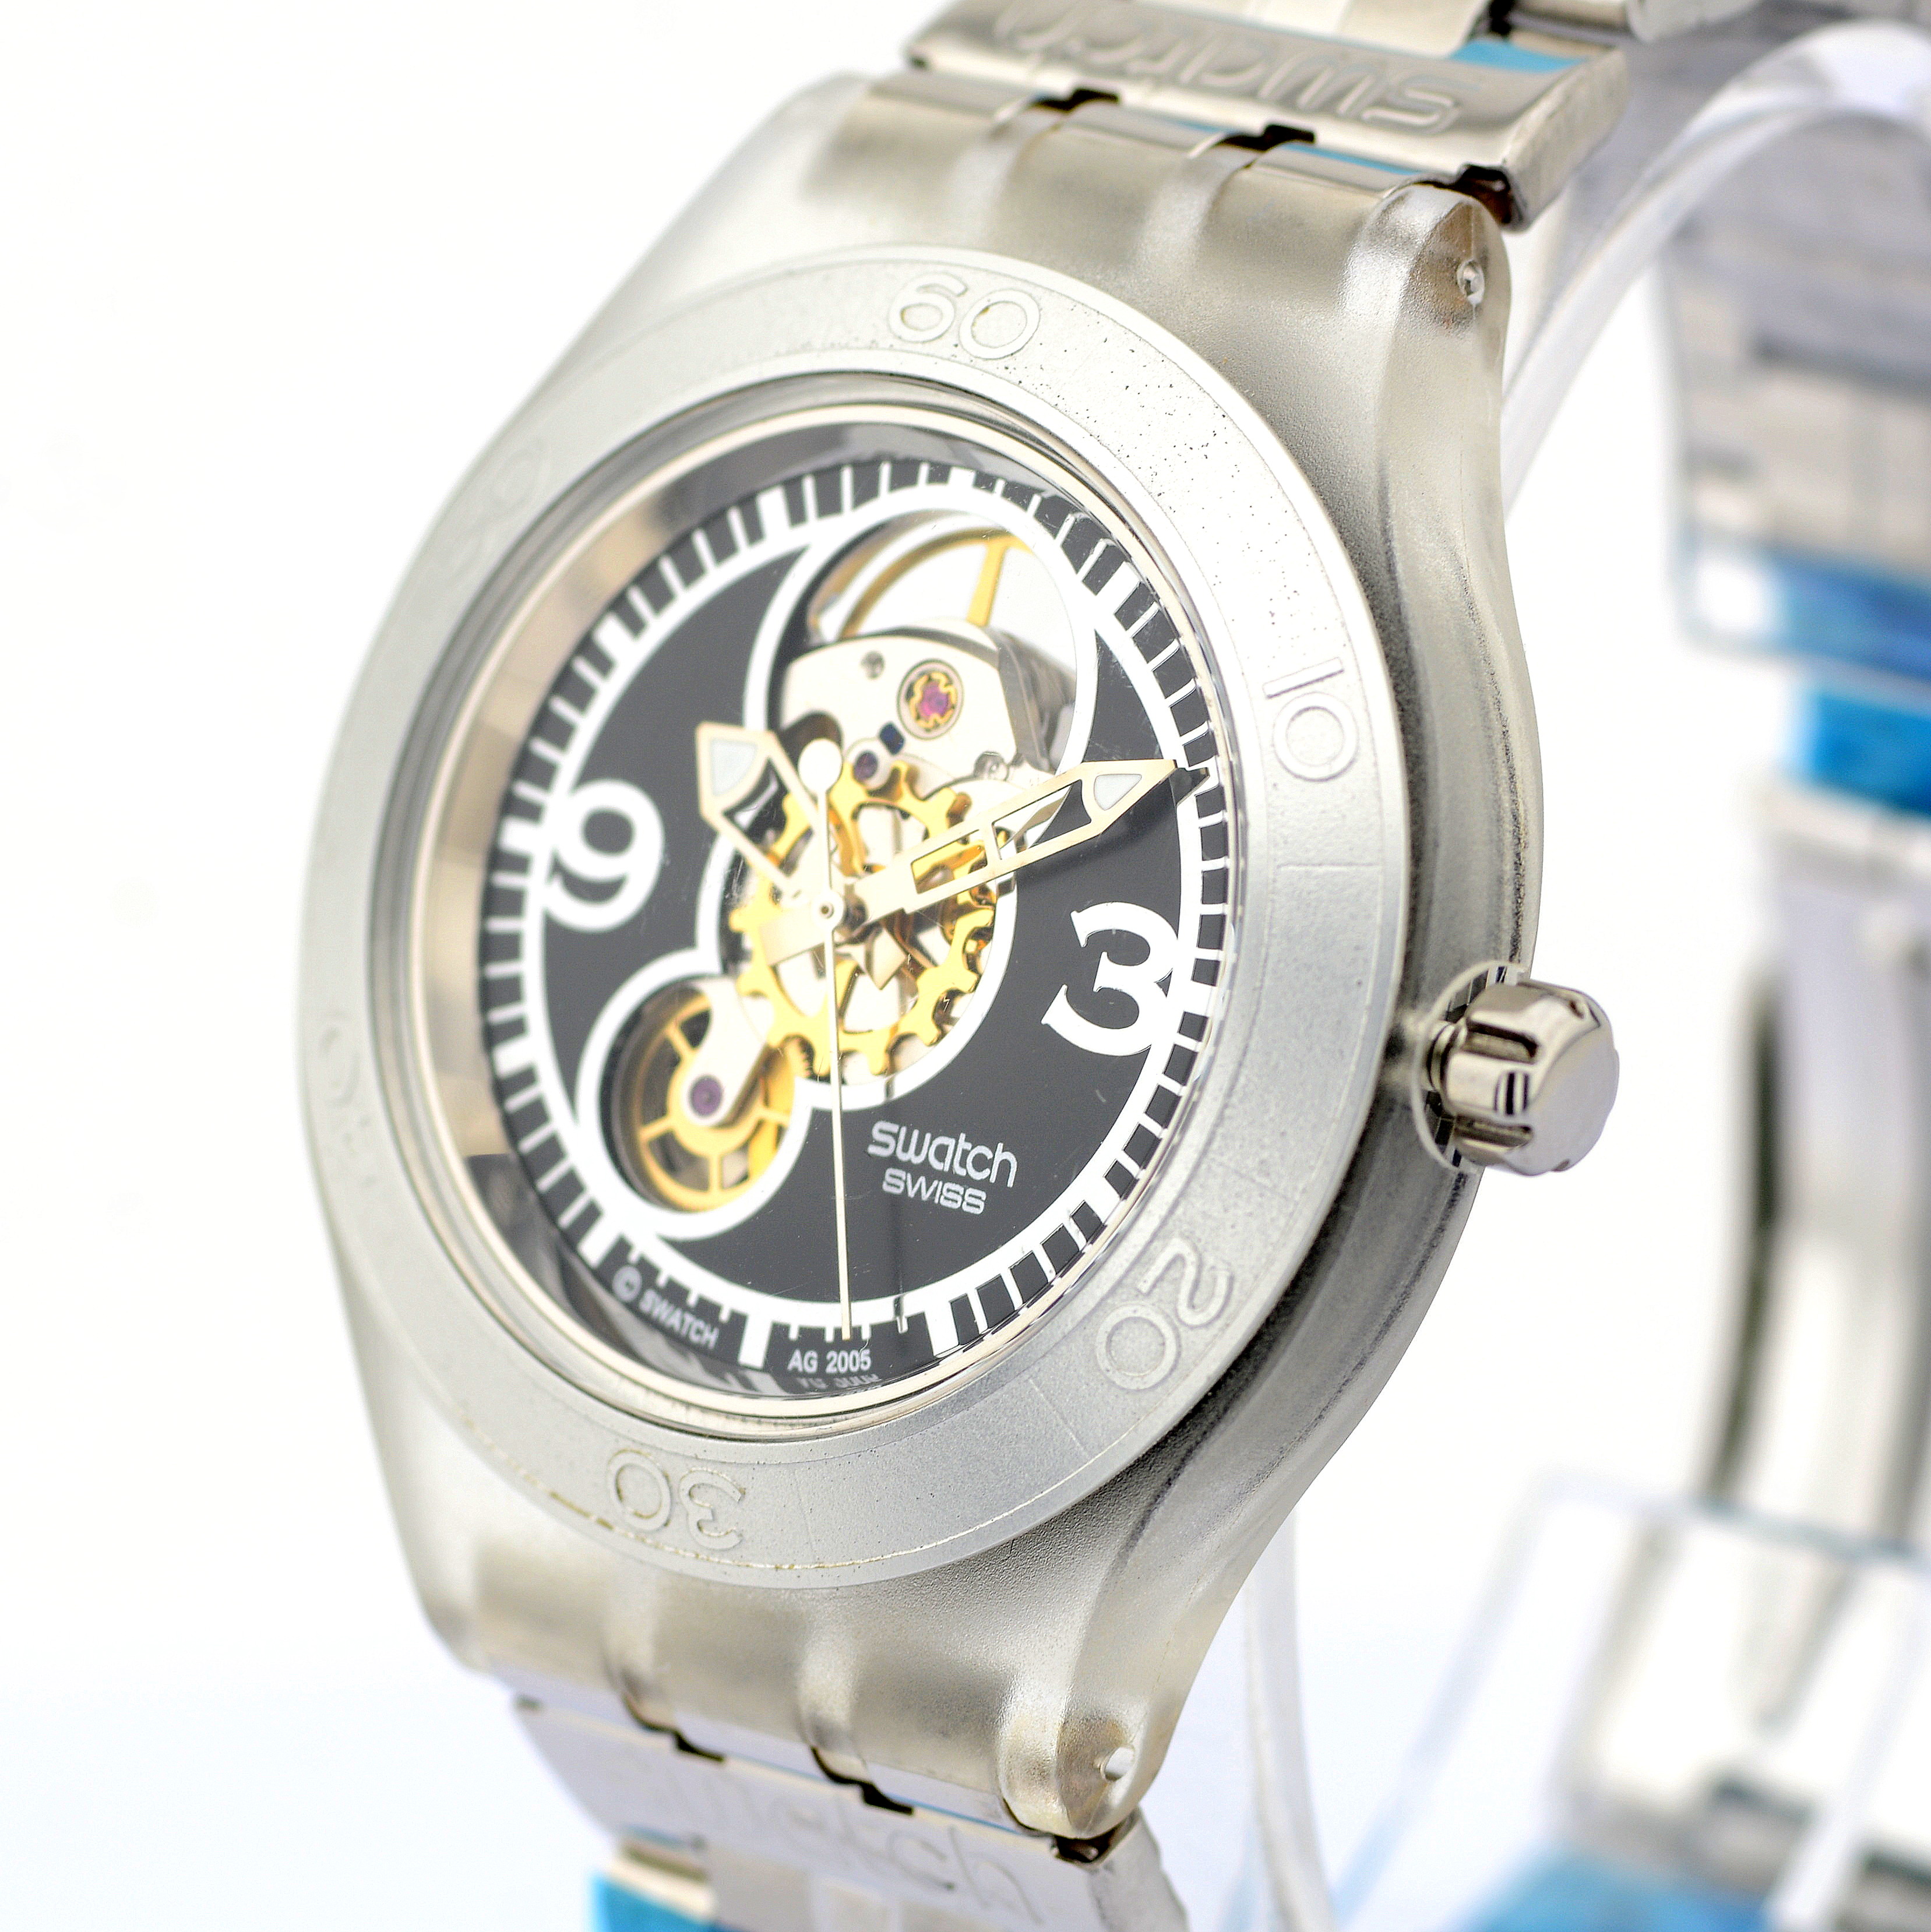 Swatch / Diaphane Irony Automatic - (Unworn) Steel Wrist Watch - Image 2 of 4